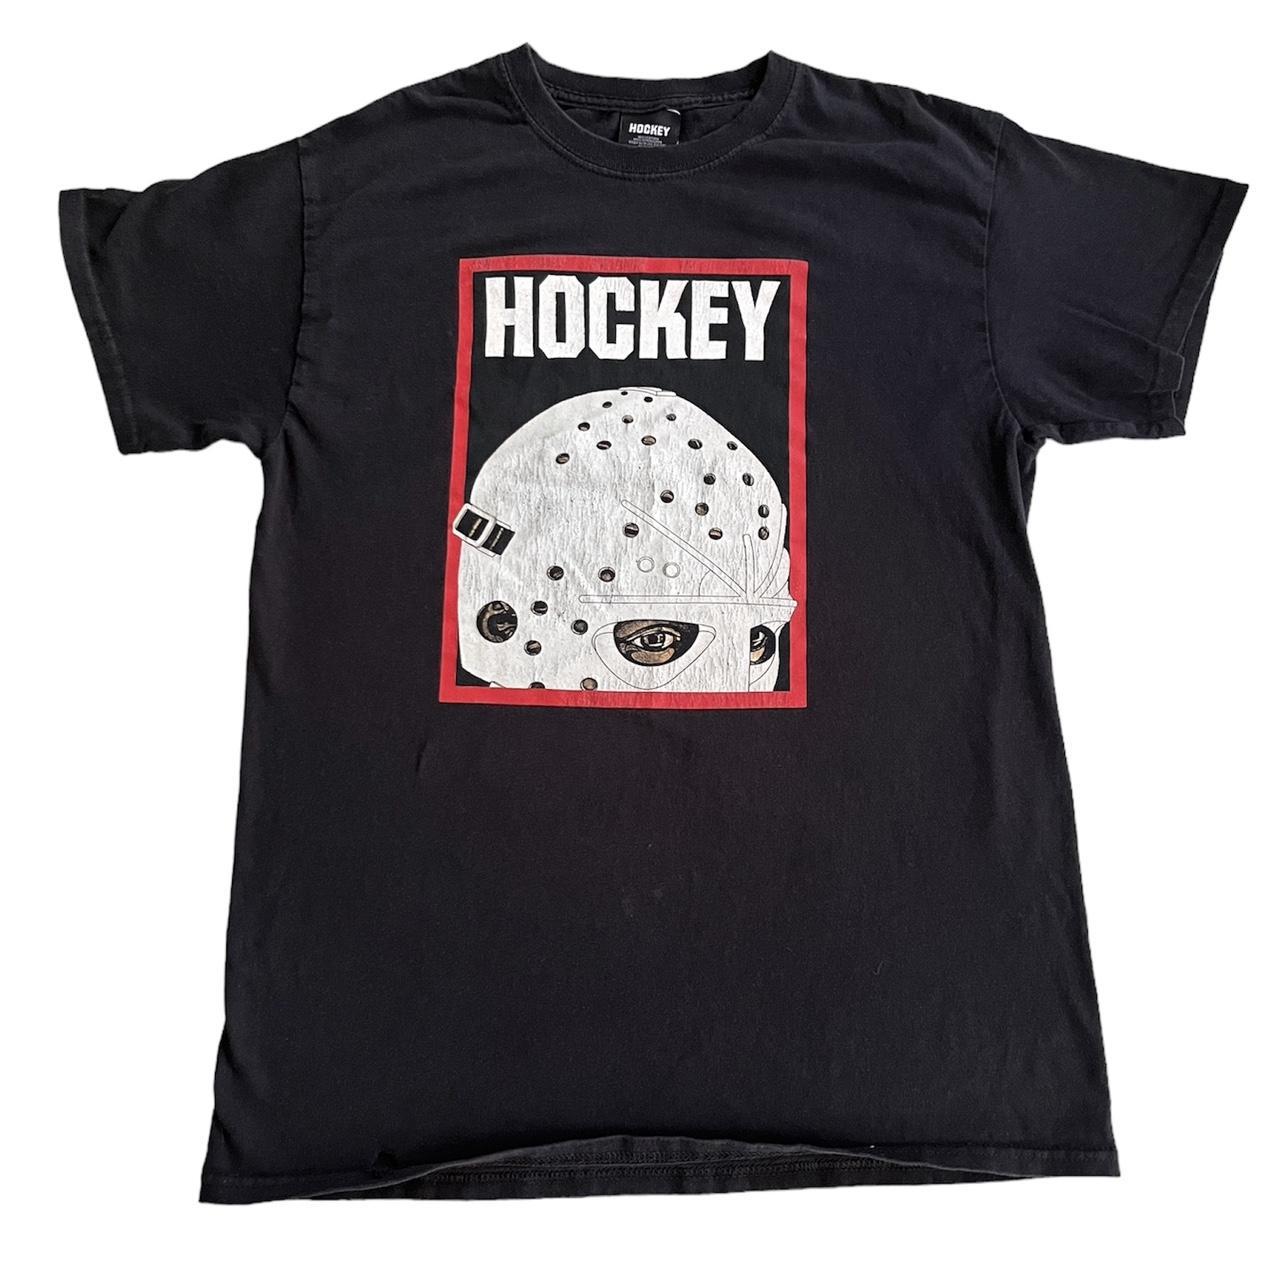 Hockey Skateboards shirt, Jason Voorhees graphic - Depop